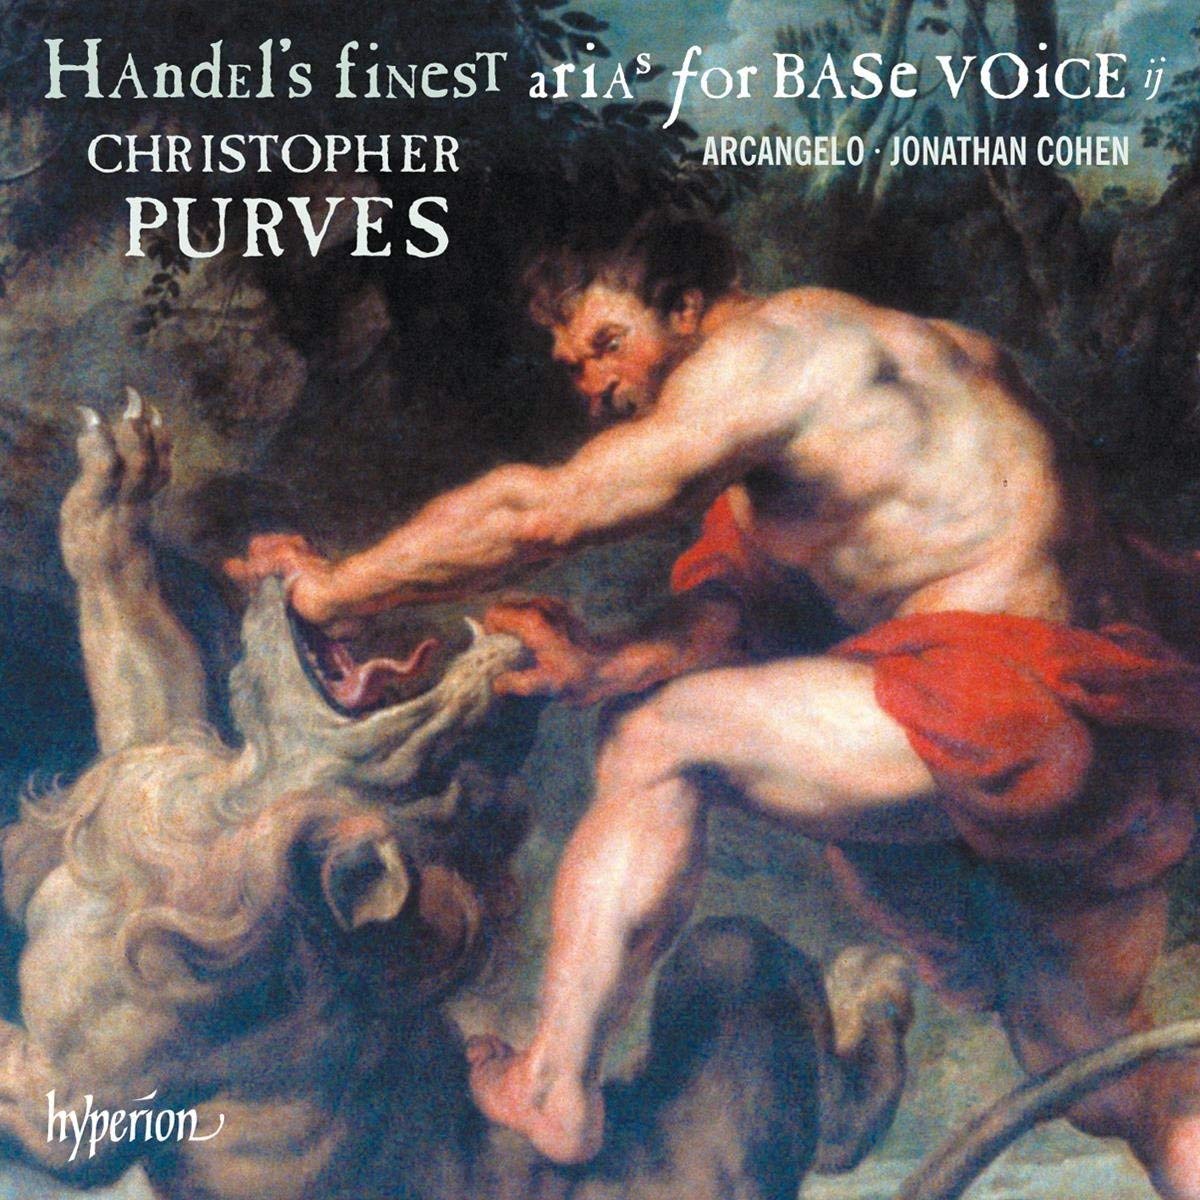 Handel, Base Voice, Hyperion